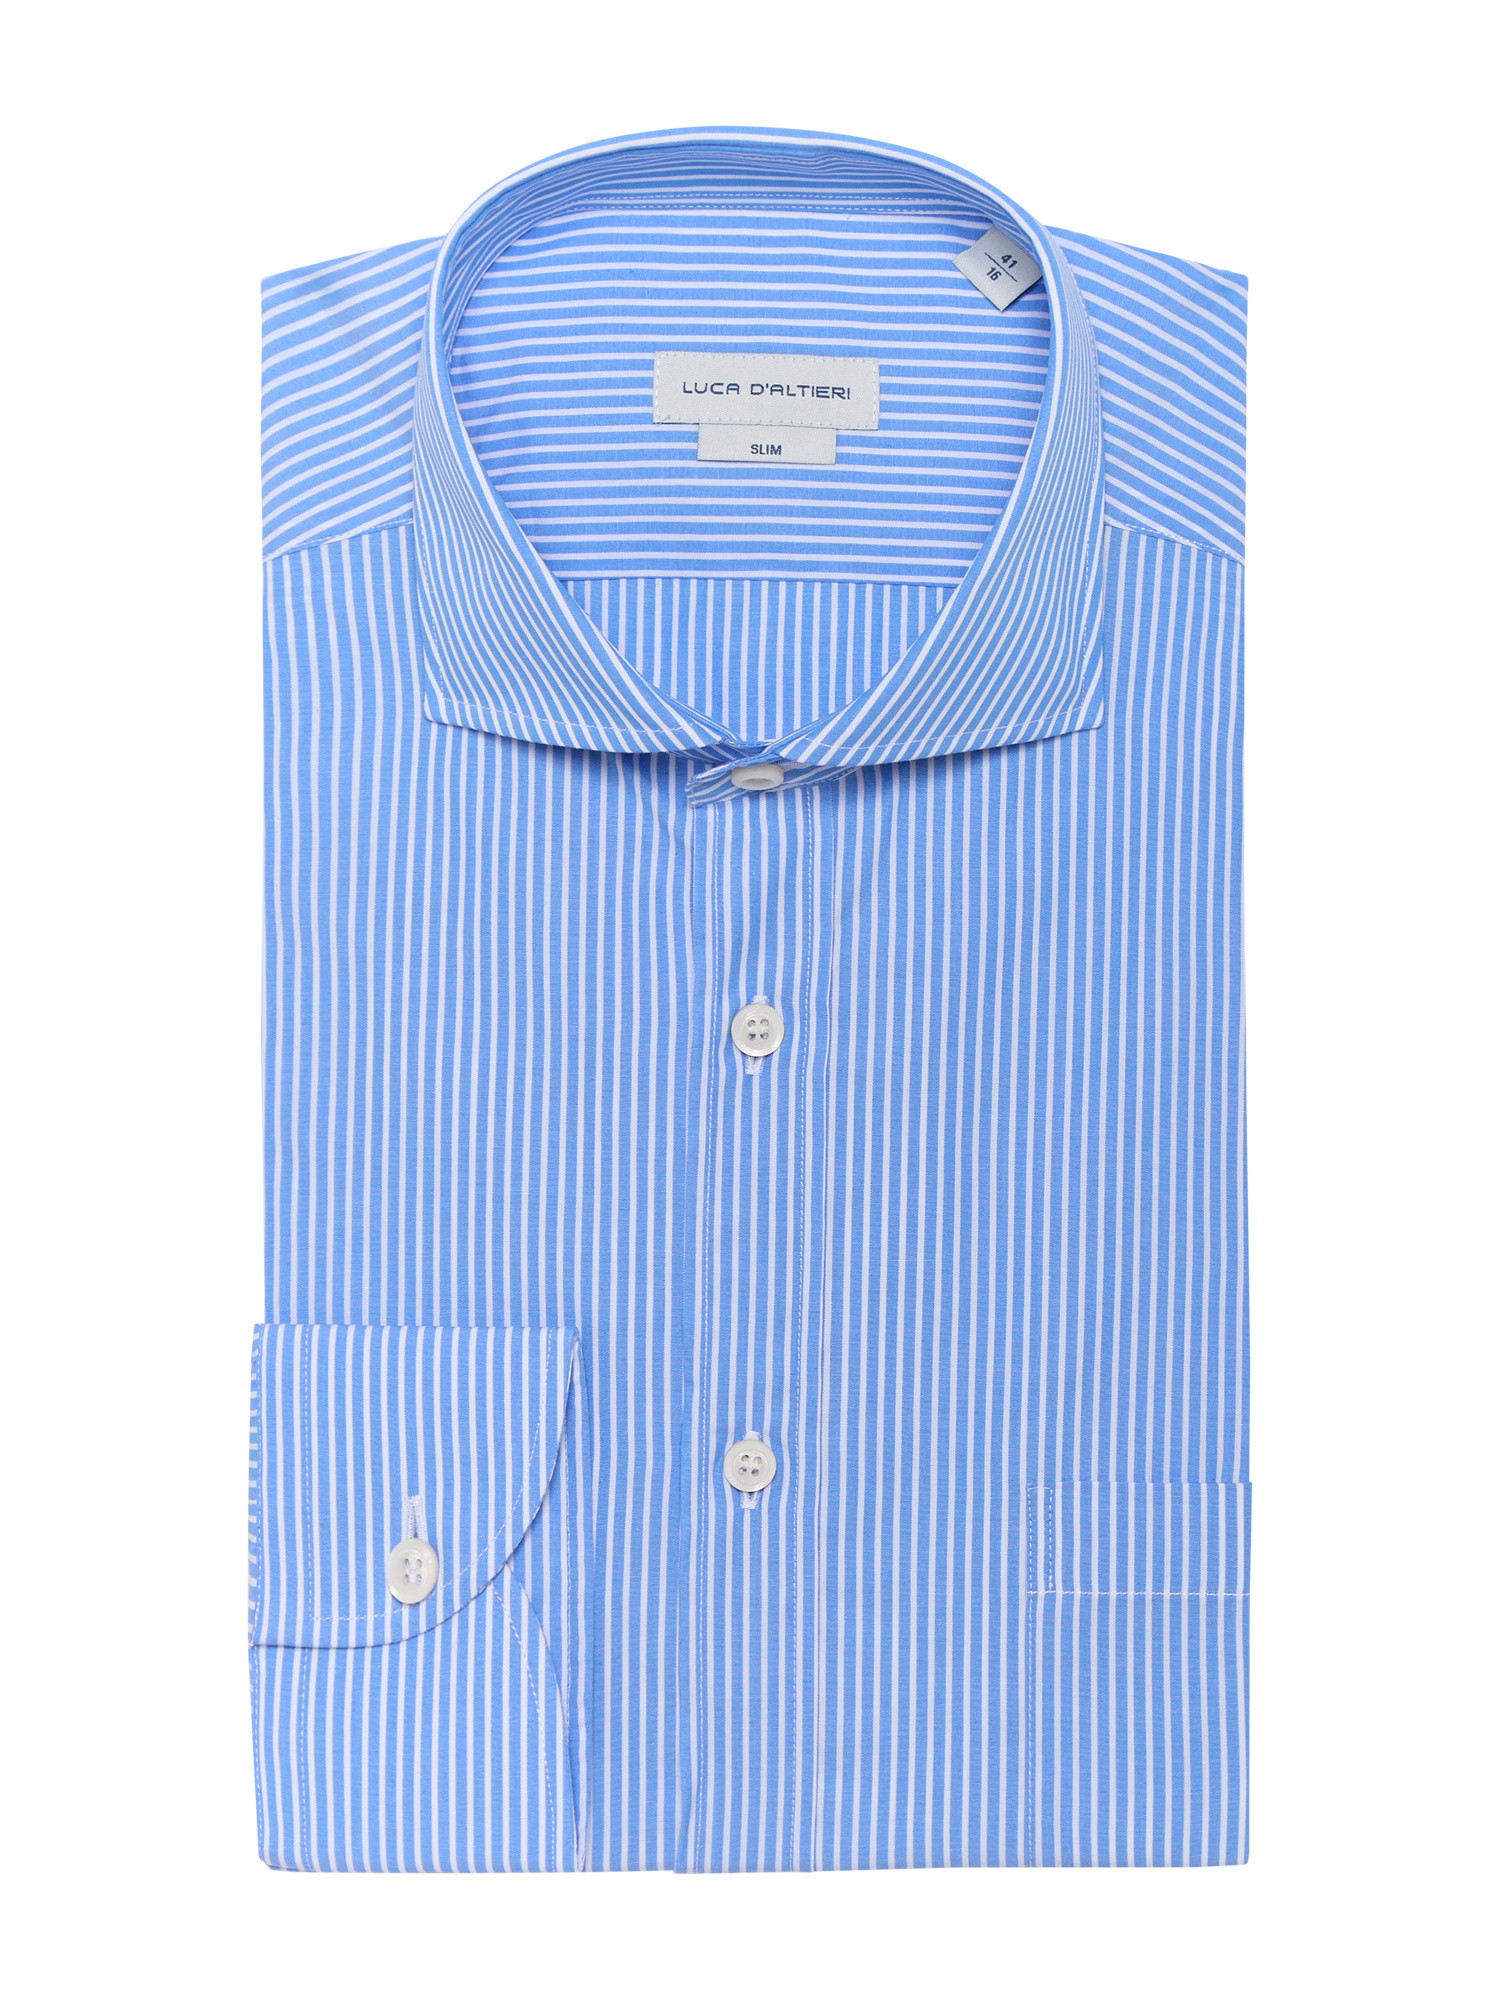 Luca D'Altieri - Casual slim fit shirt in pure cotton poplin, Light Blue, large image number 0